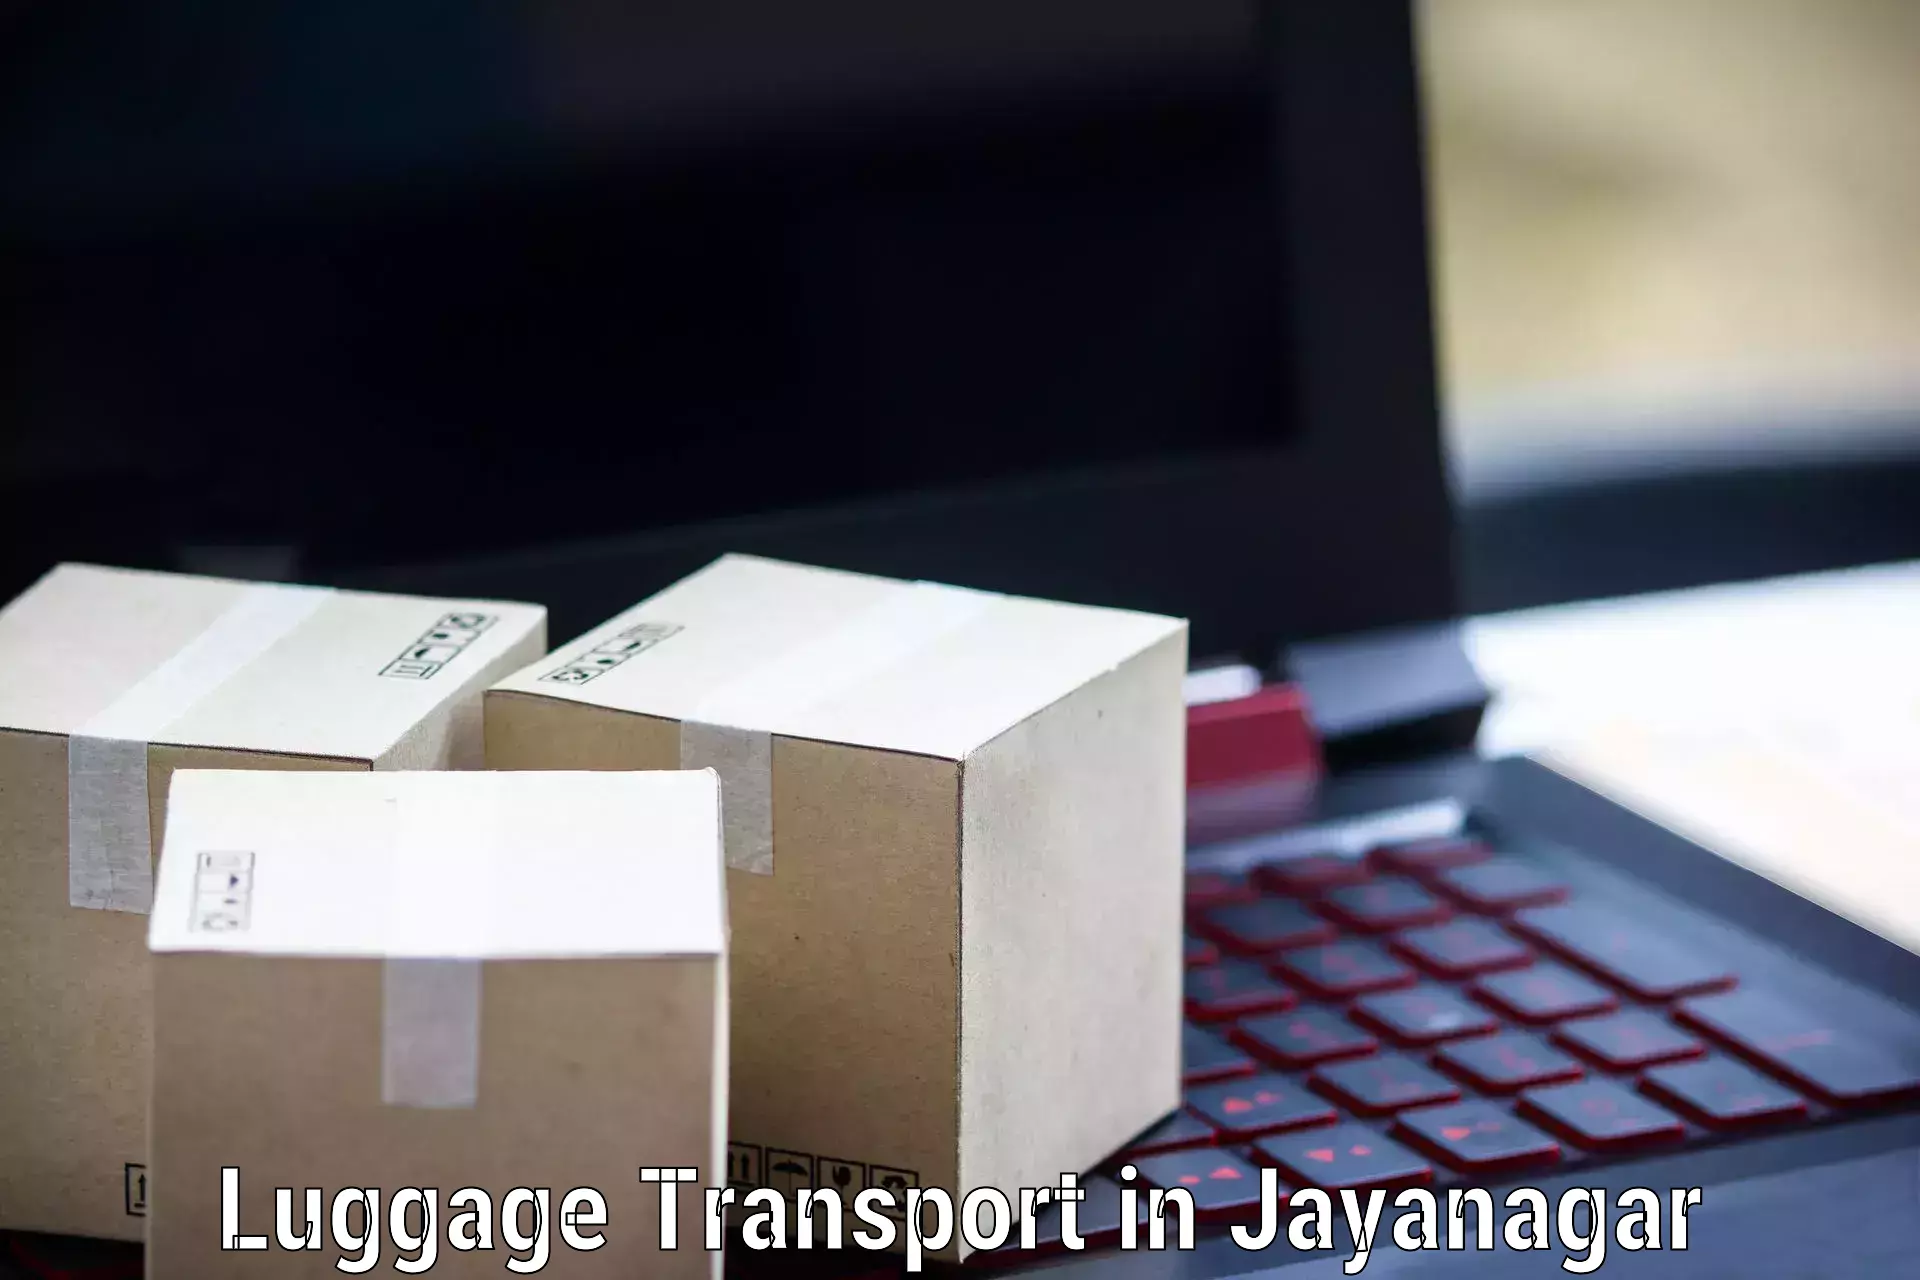 Doorstep luggage collection in Jayanagar